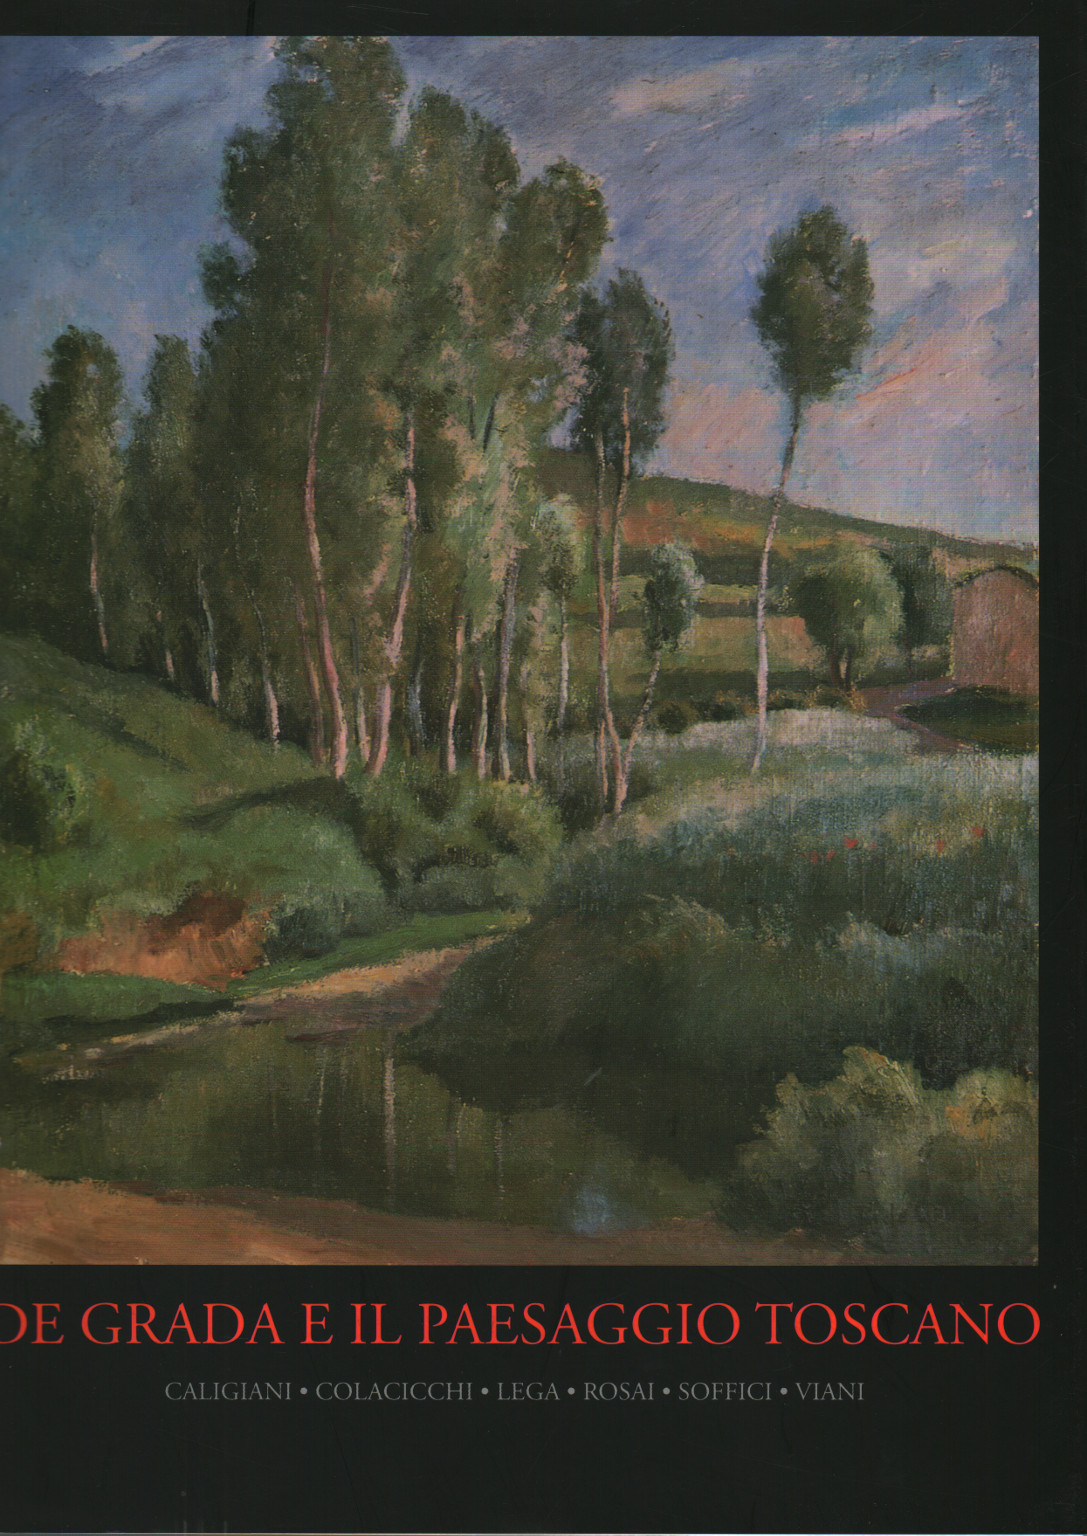 De Grada and the tuscan landscape, s.a.